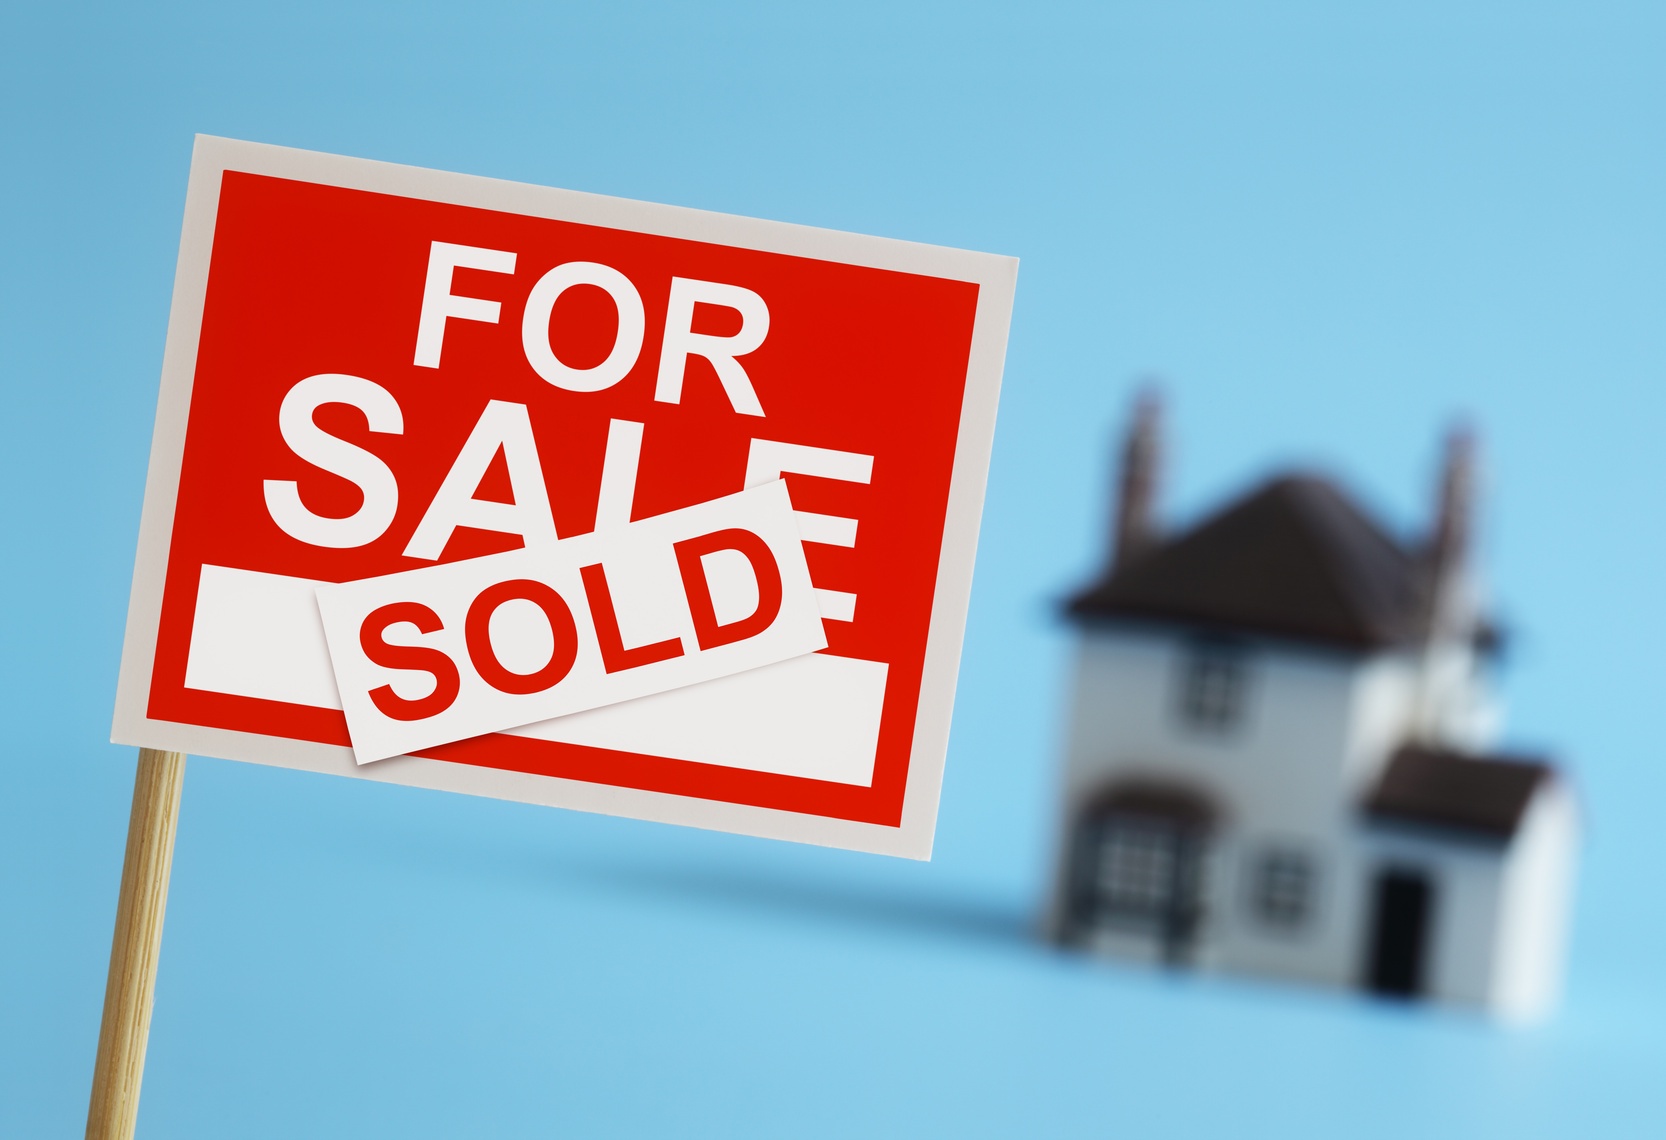 Property sales slow across New Zealand